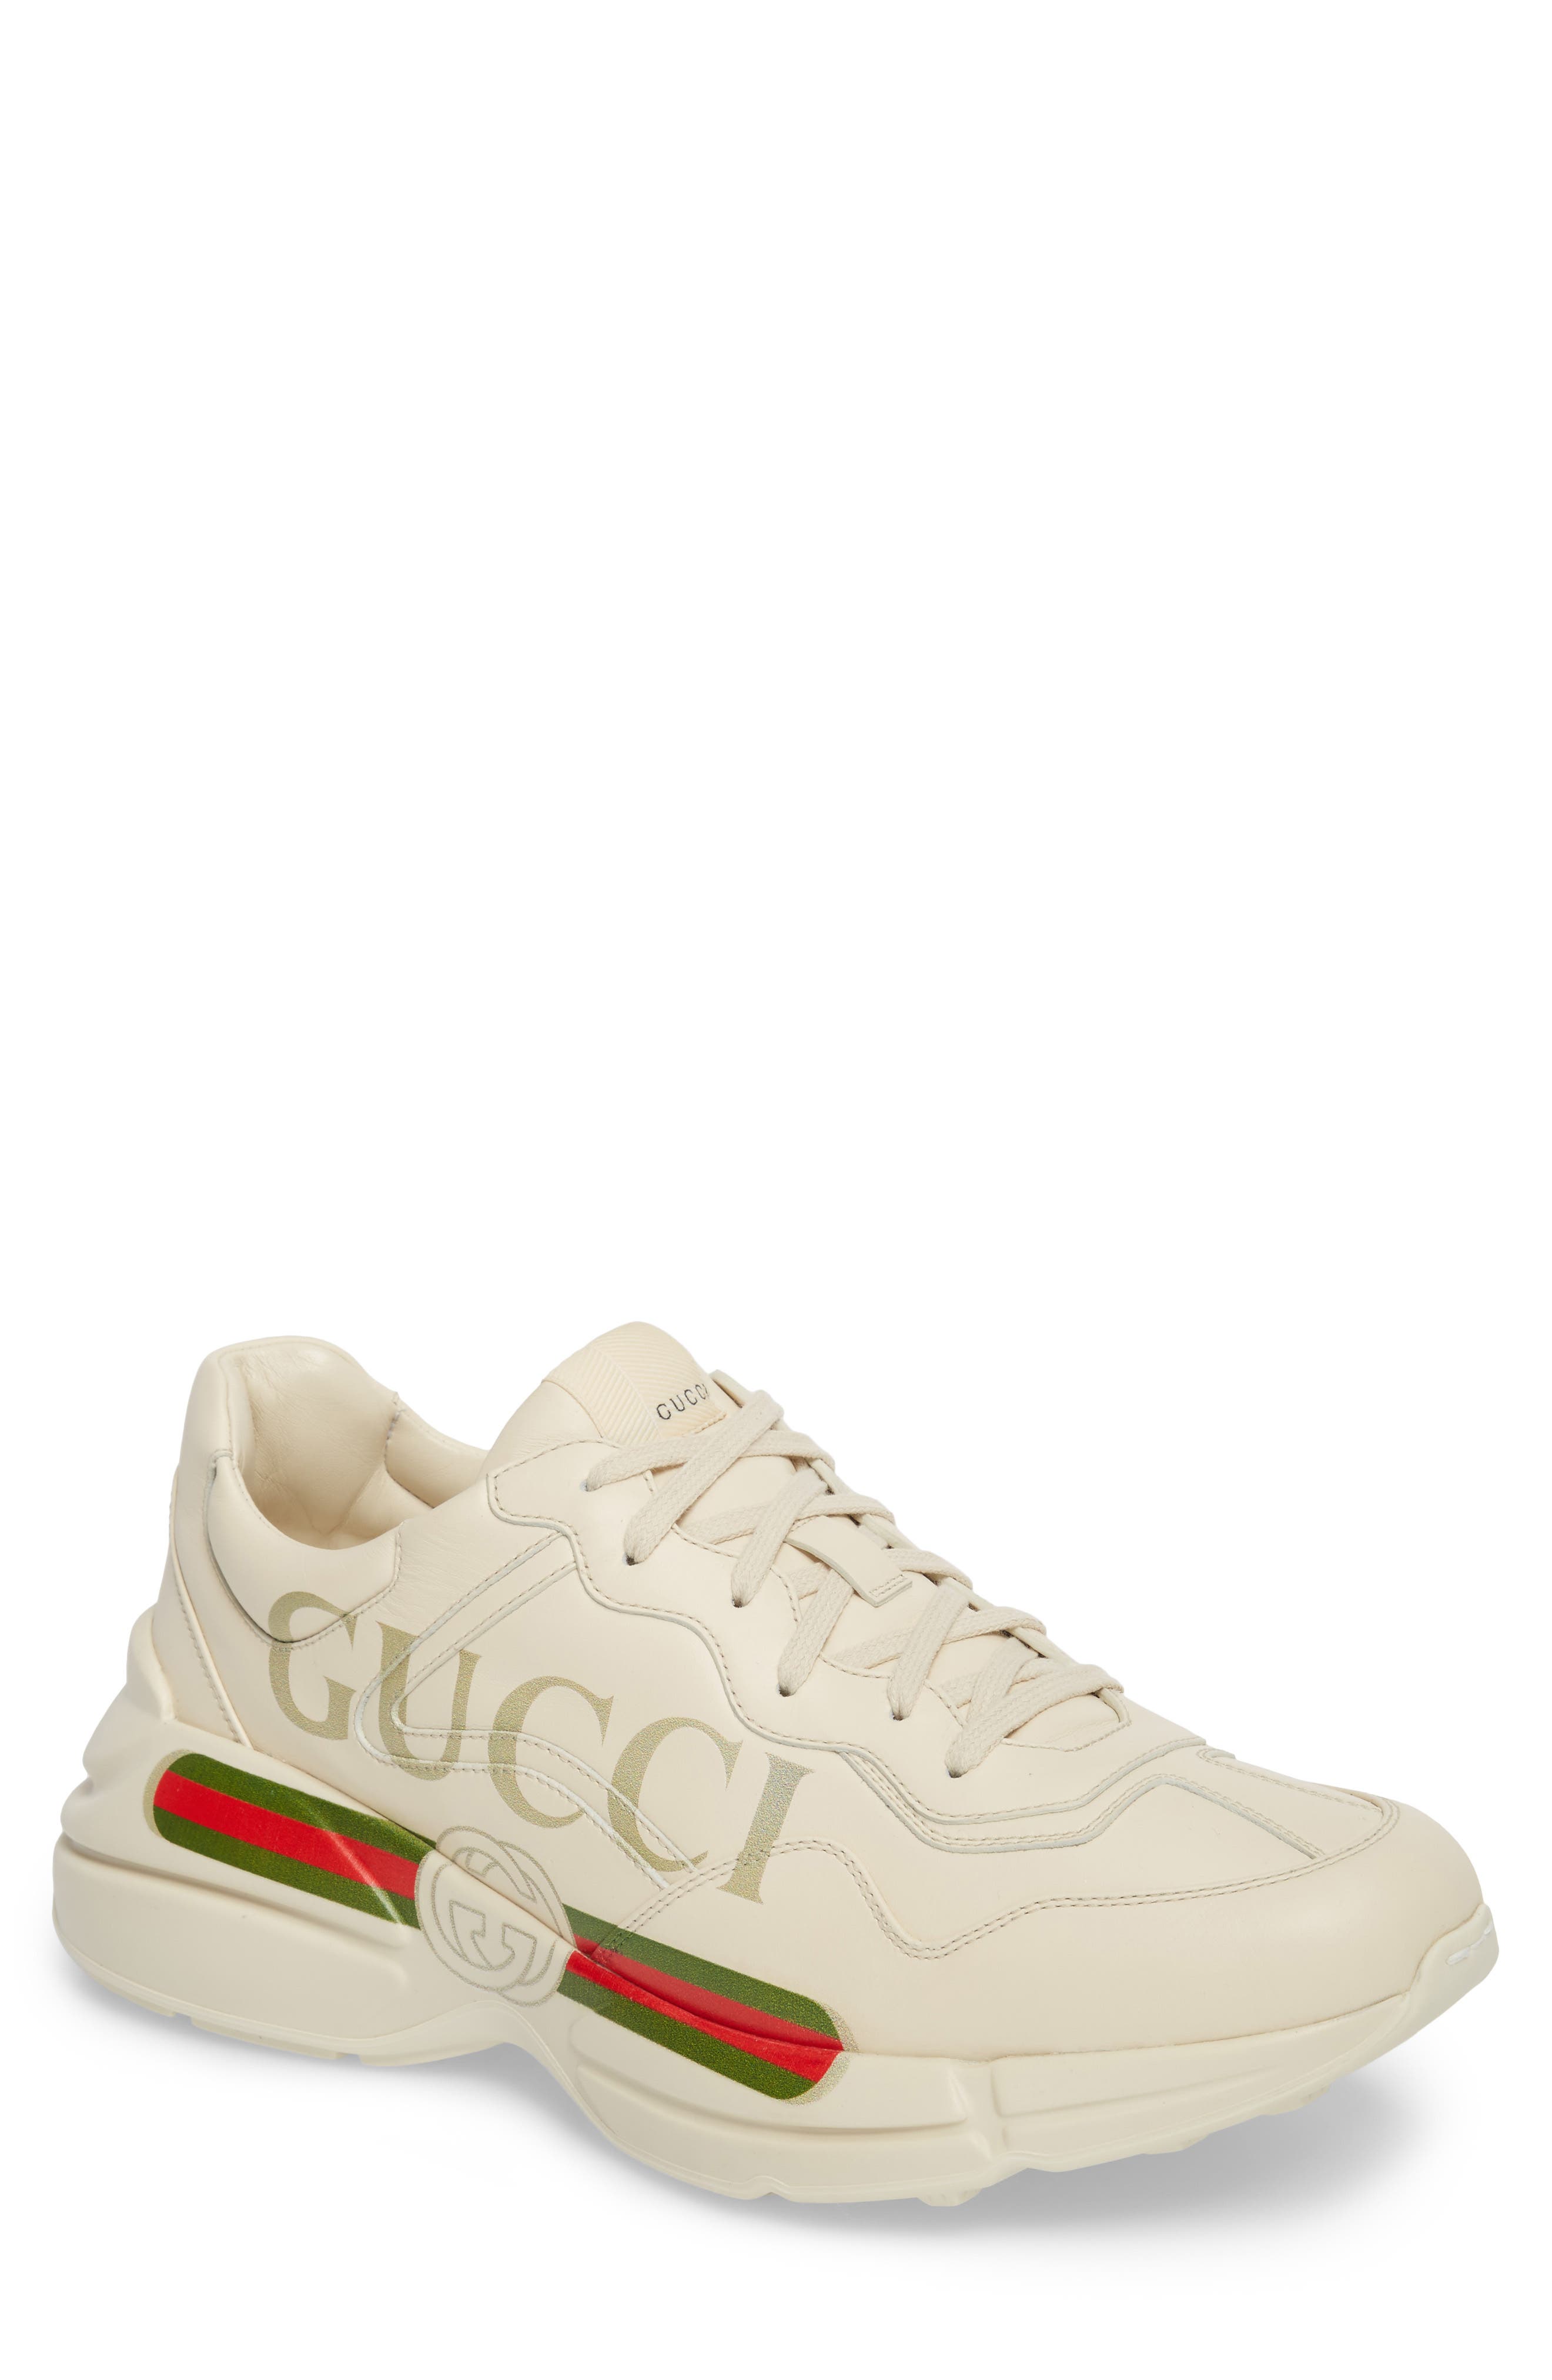 white gucci gym shoes